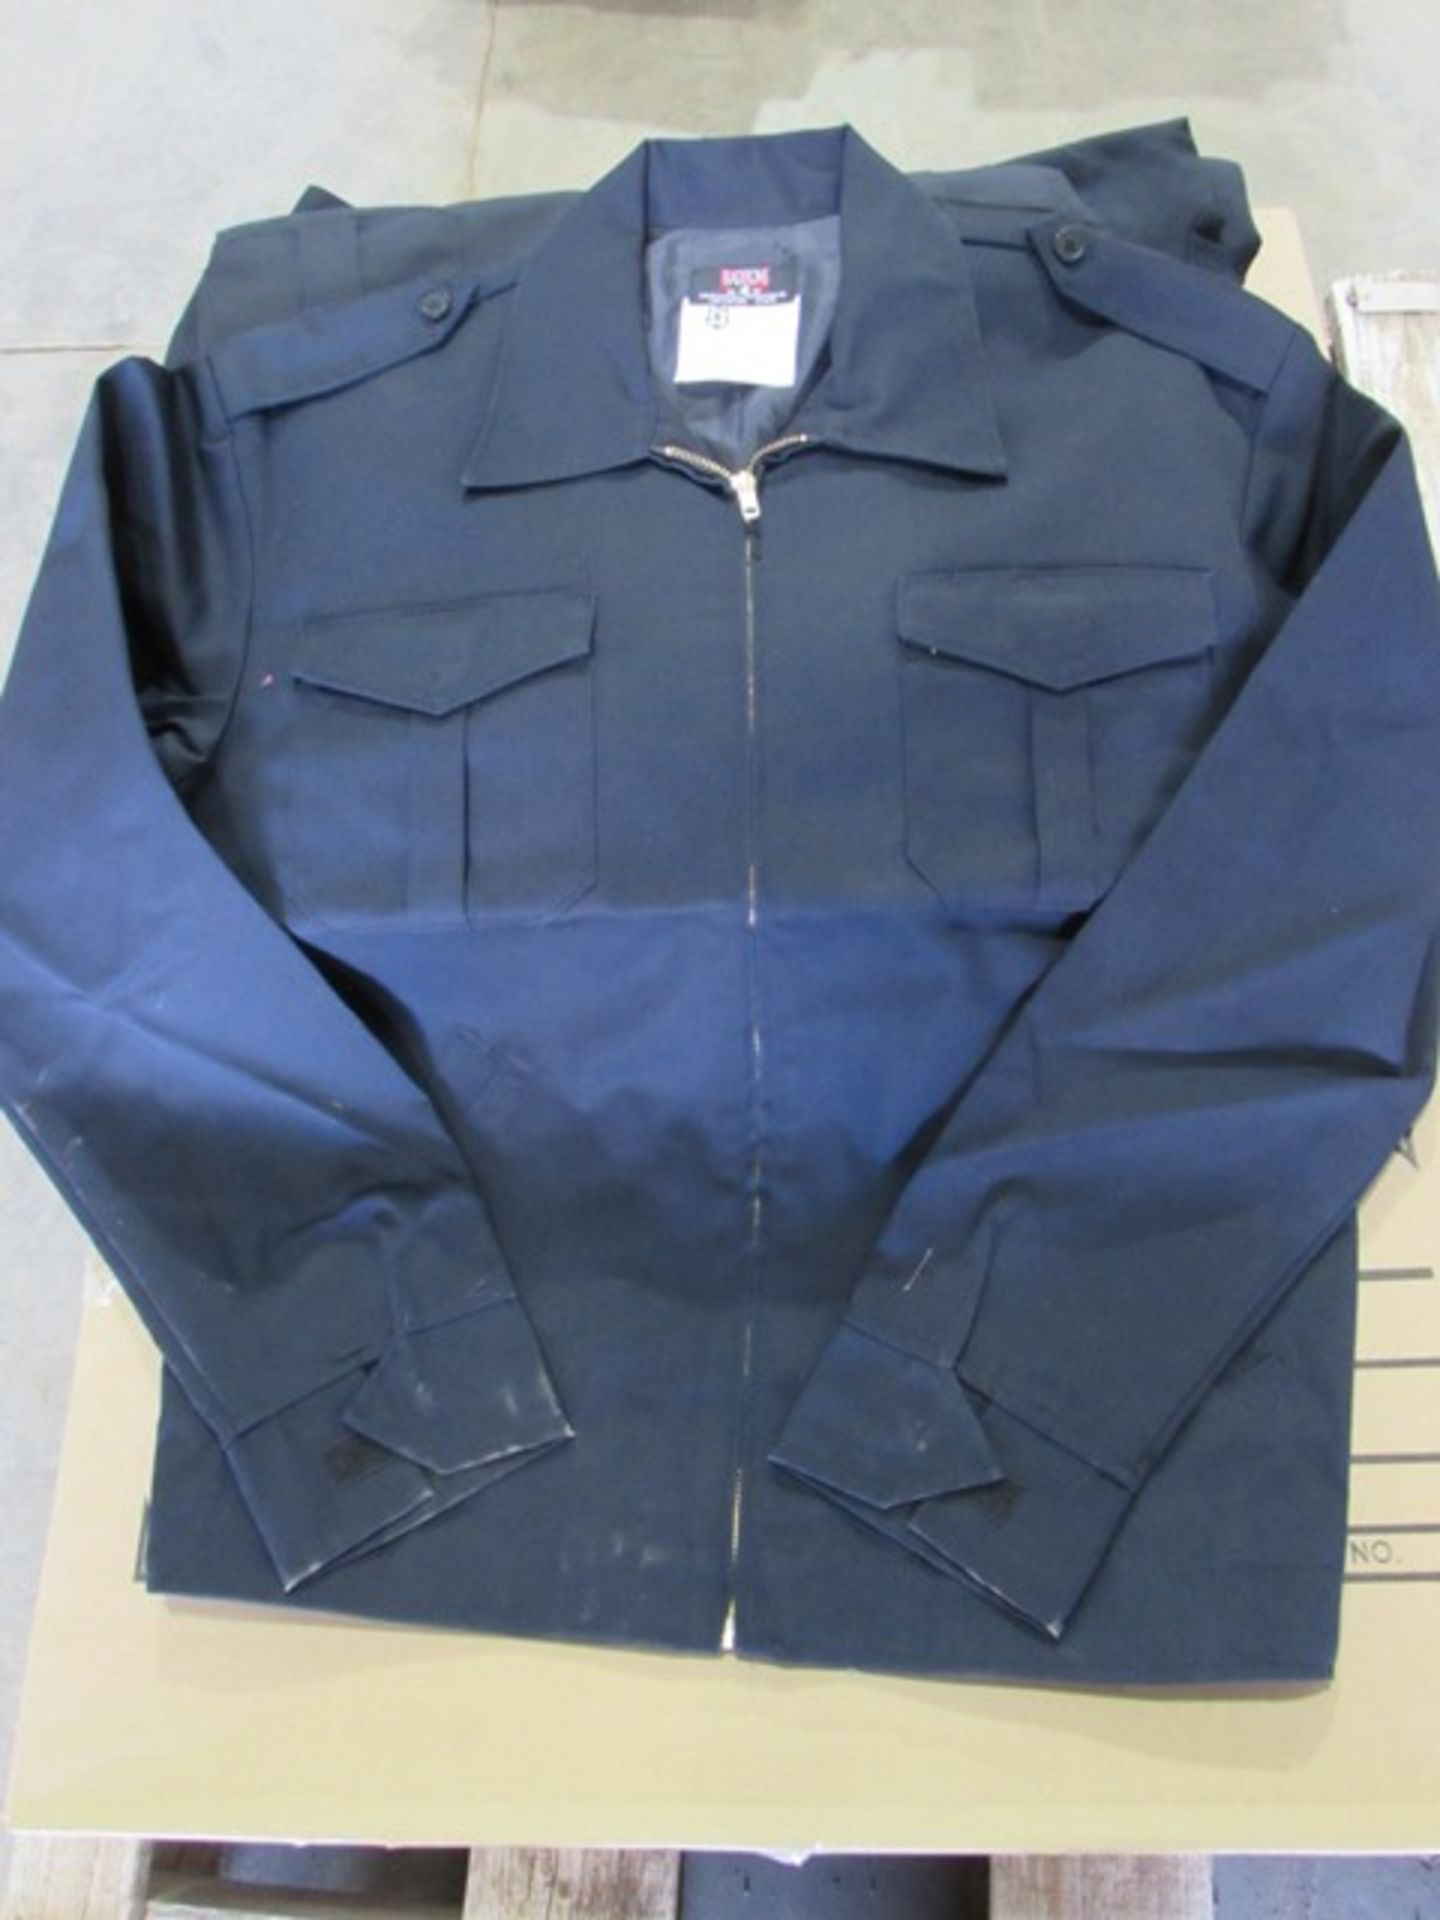 Lot  brand new navy blue work jackets (approx 22 pcs)